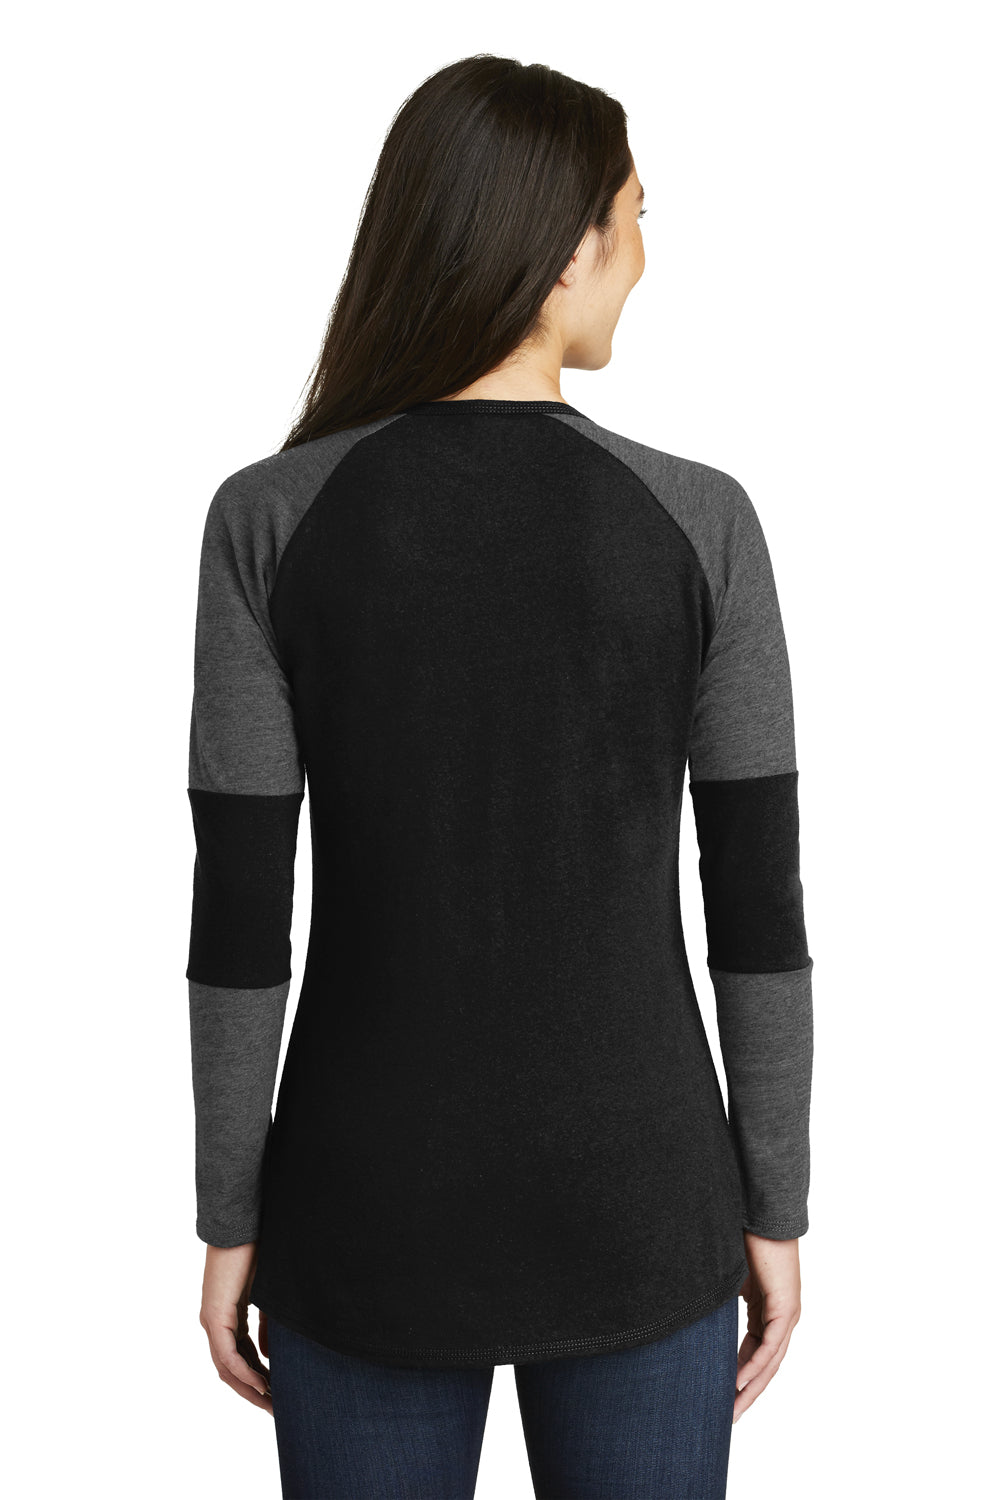 New Era LNEA132 Womens Performance Moisture Wicking Long Sleeve Crewneck T-Shirt Dark Graphite Grey/Black Back